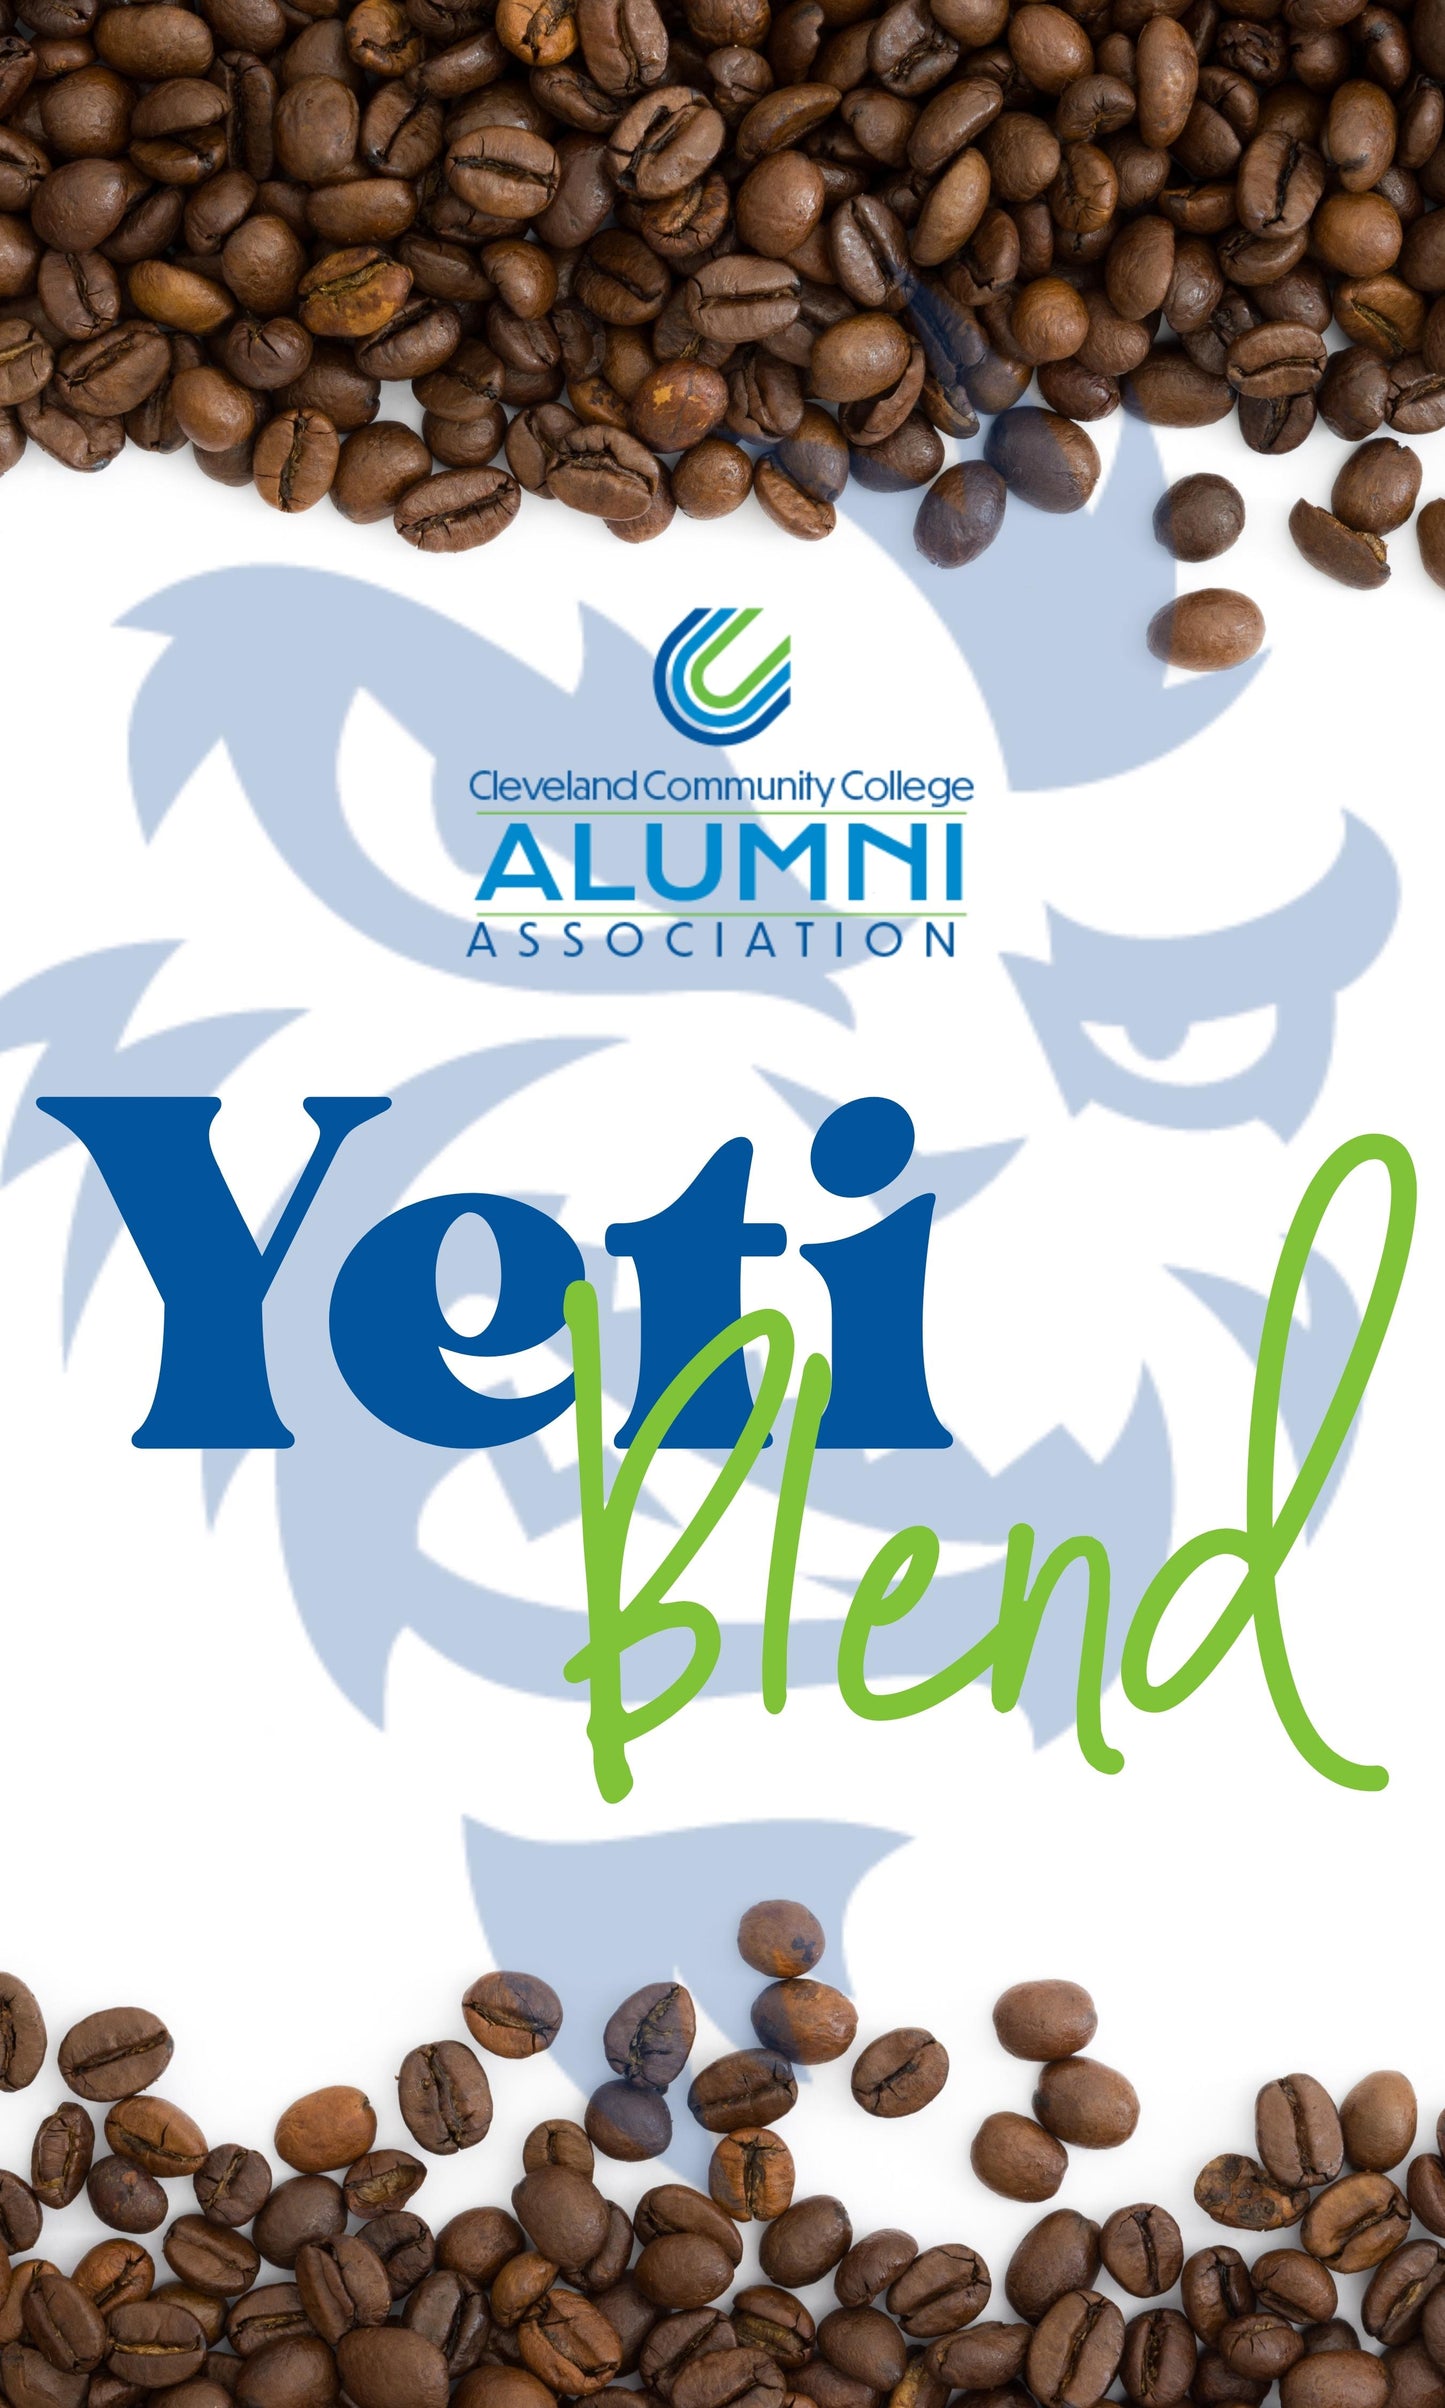 Yeti Blend - Cleveland Community College Fundraiser